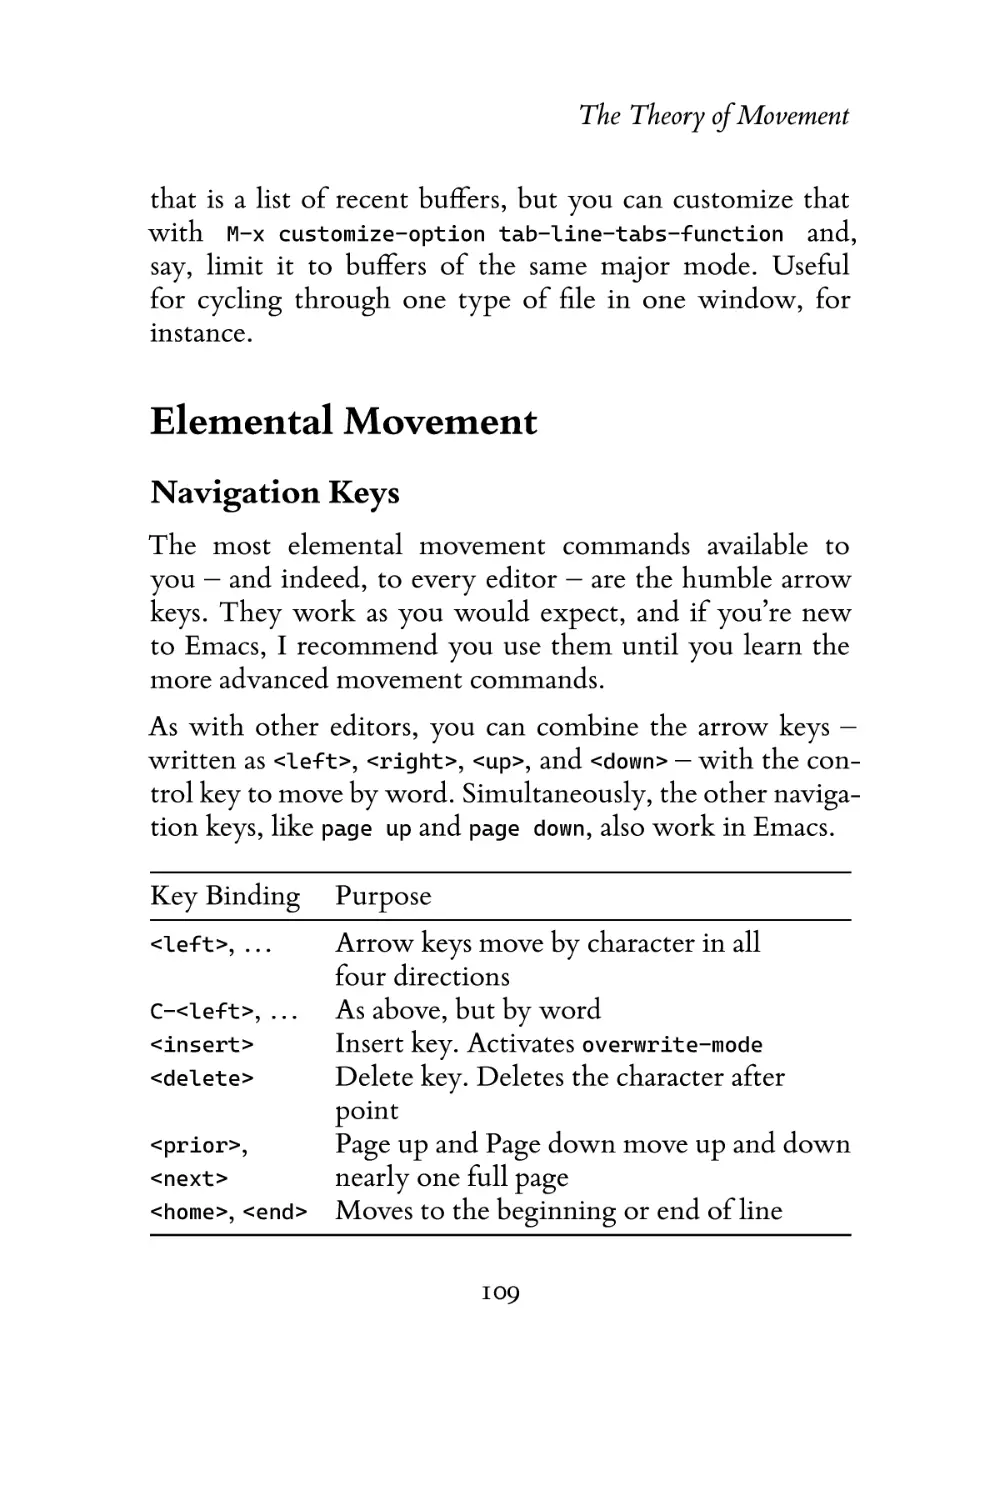 Elemental Movement
Navigation Keys